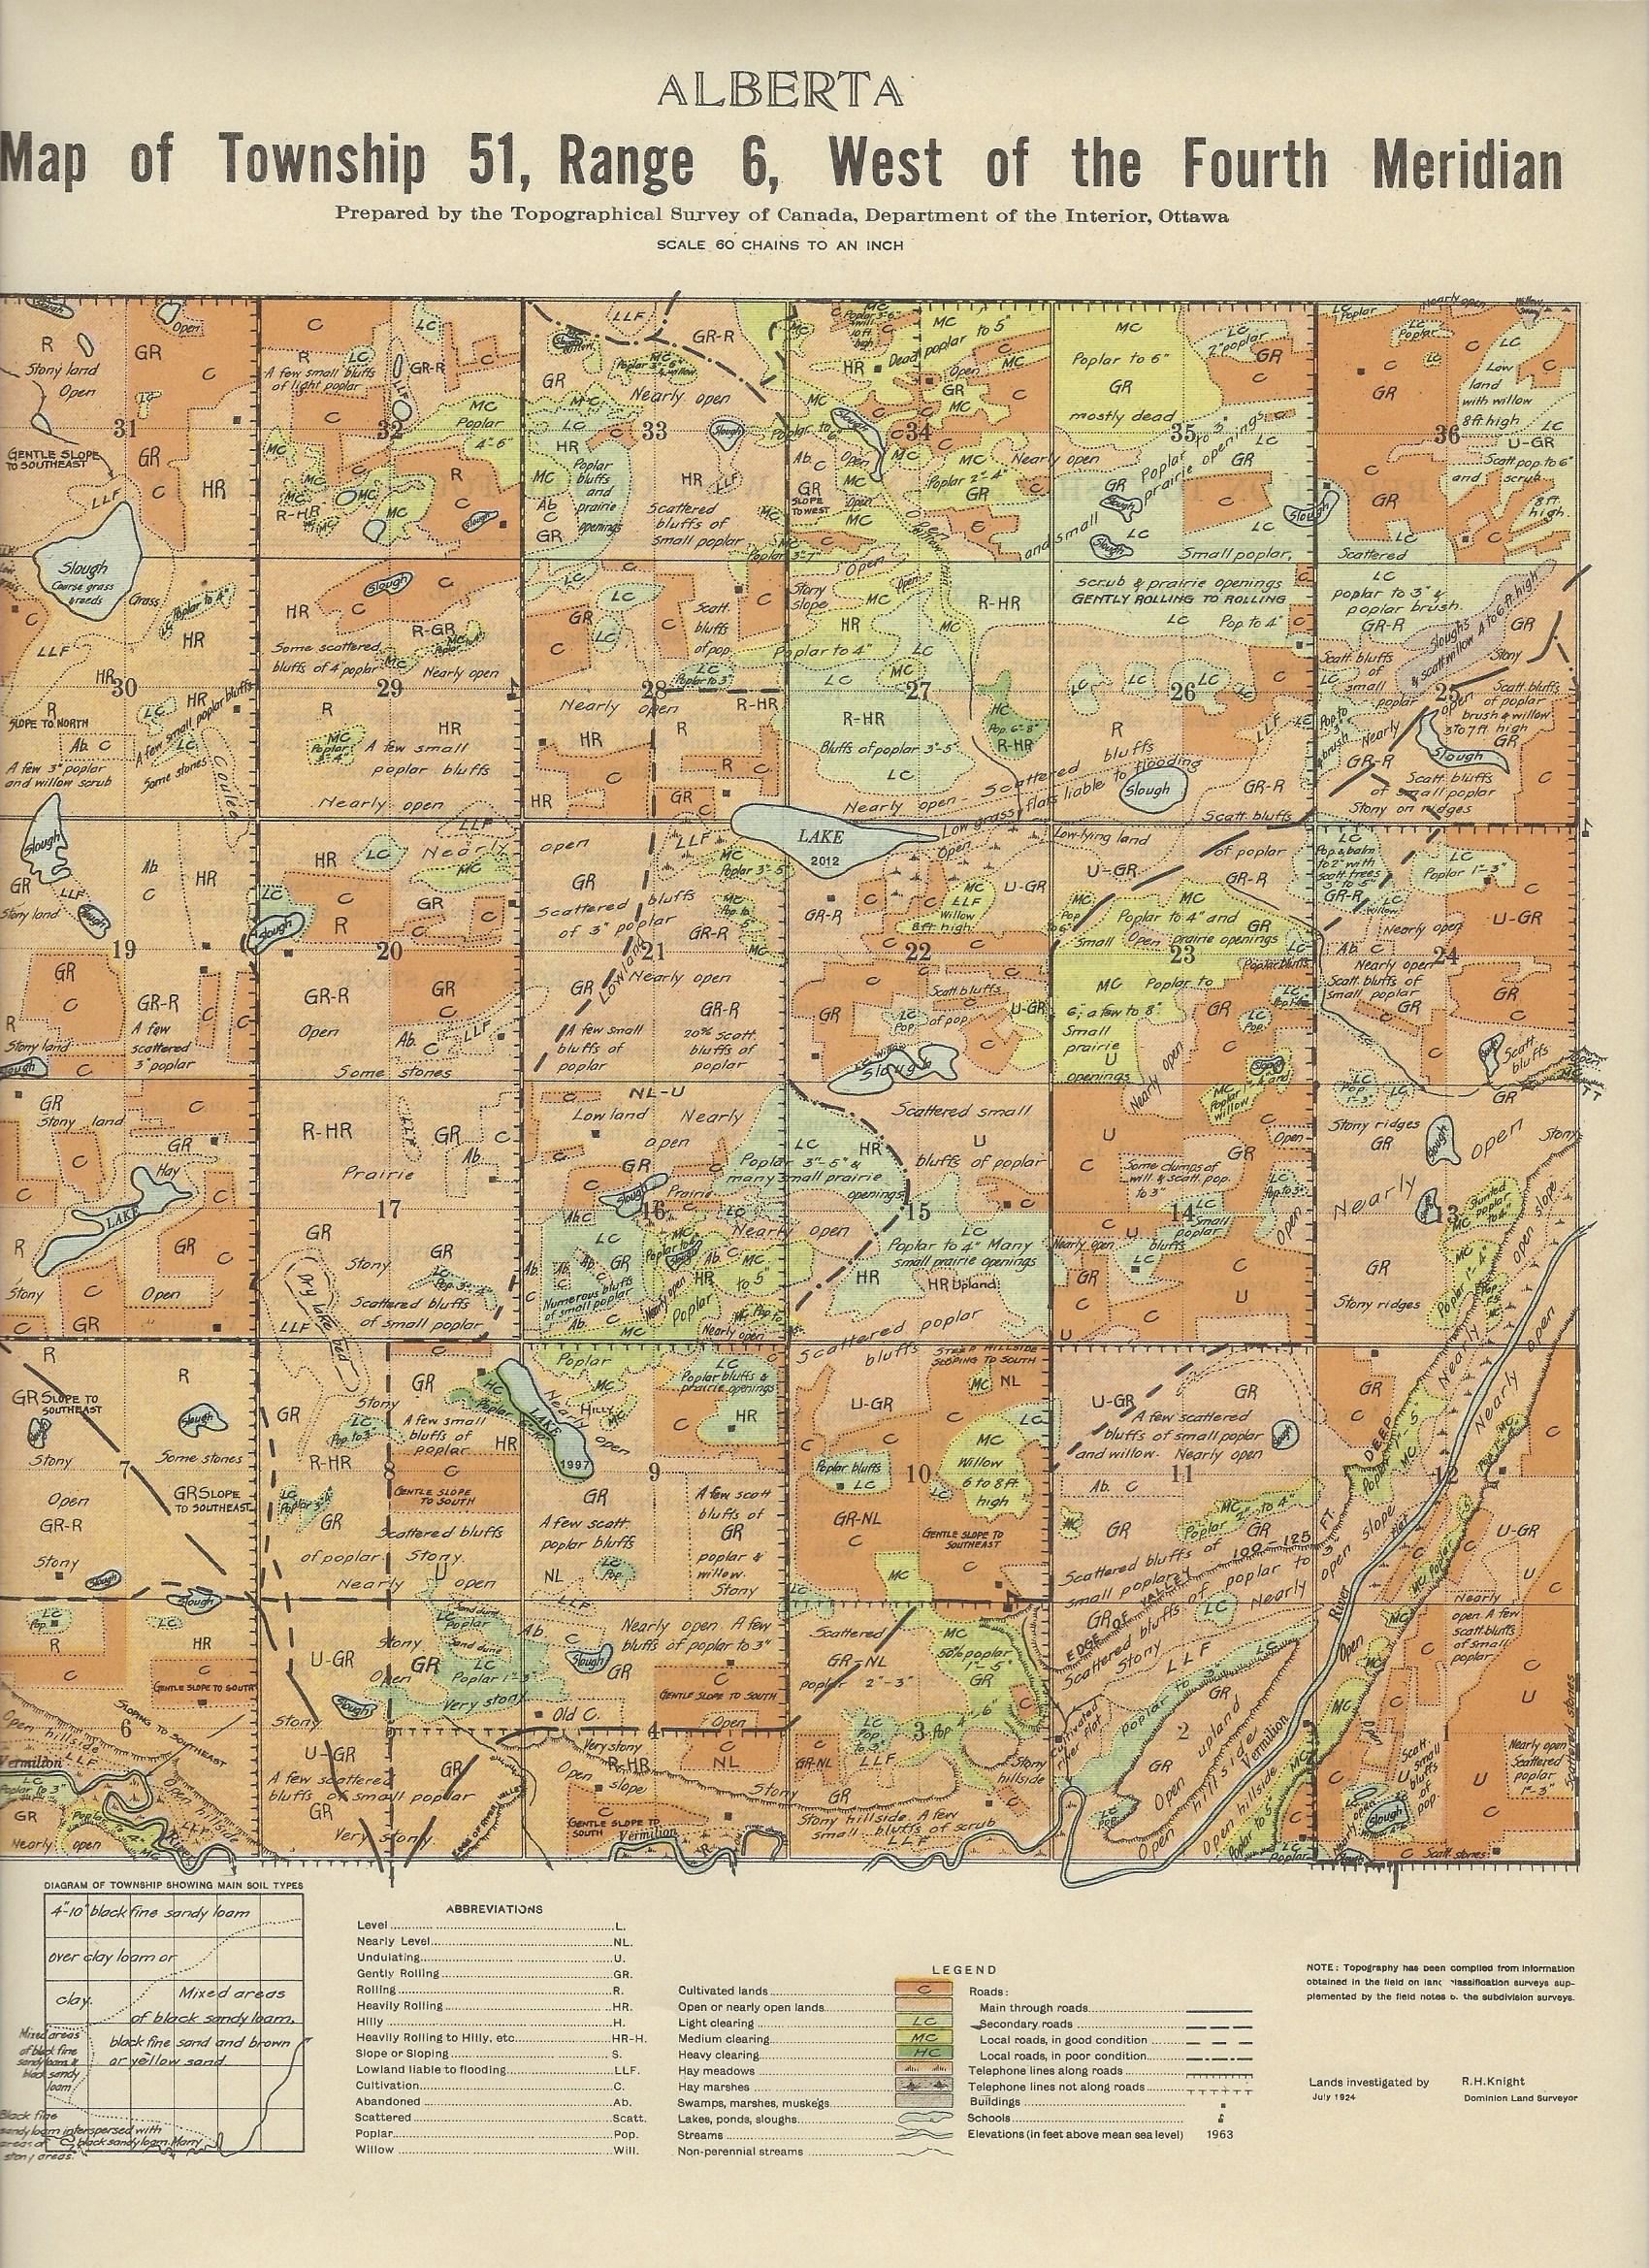 Township 51 Range 6 w of 4th 1924